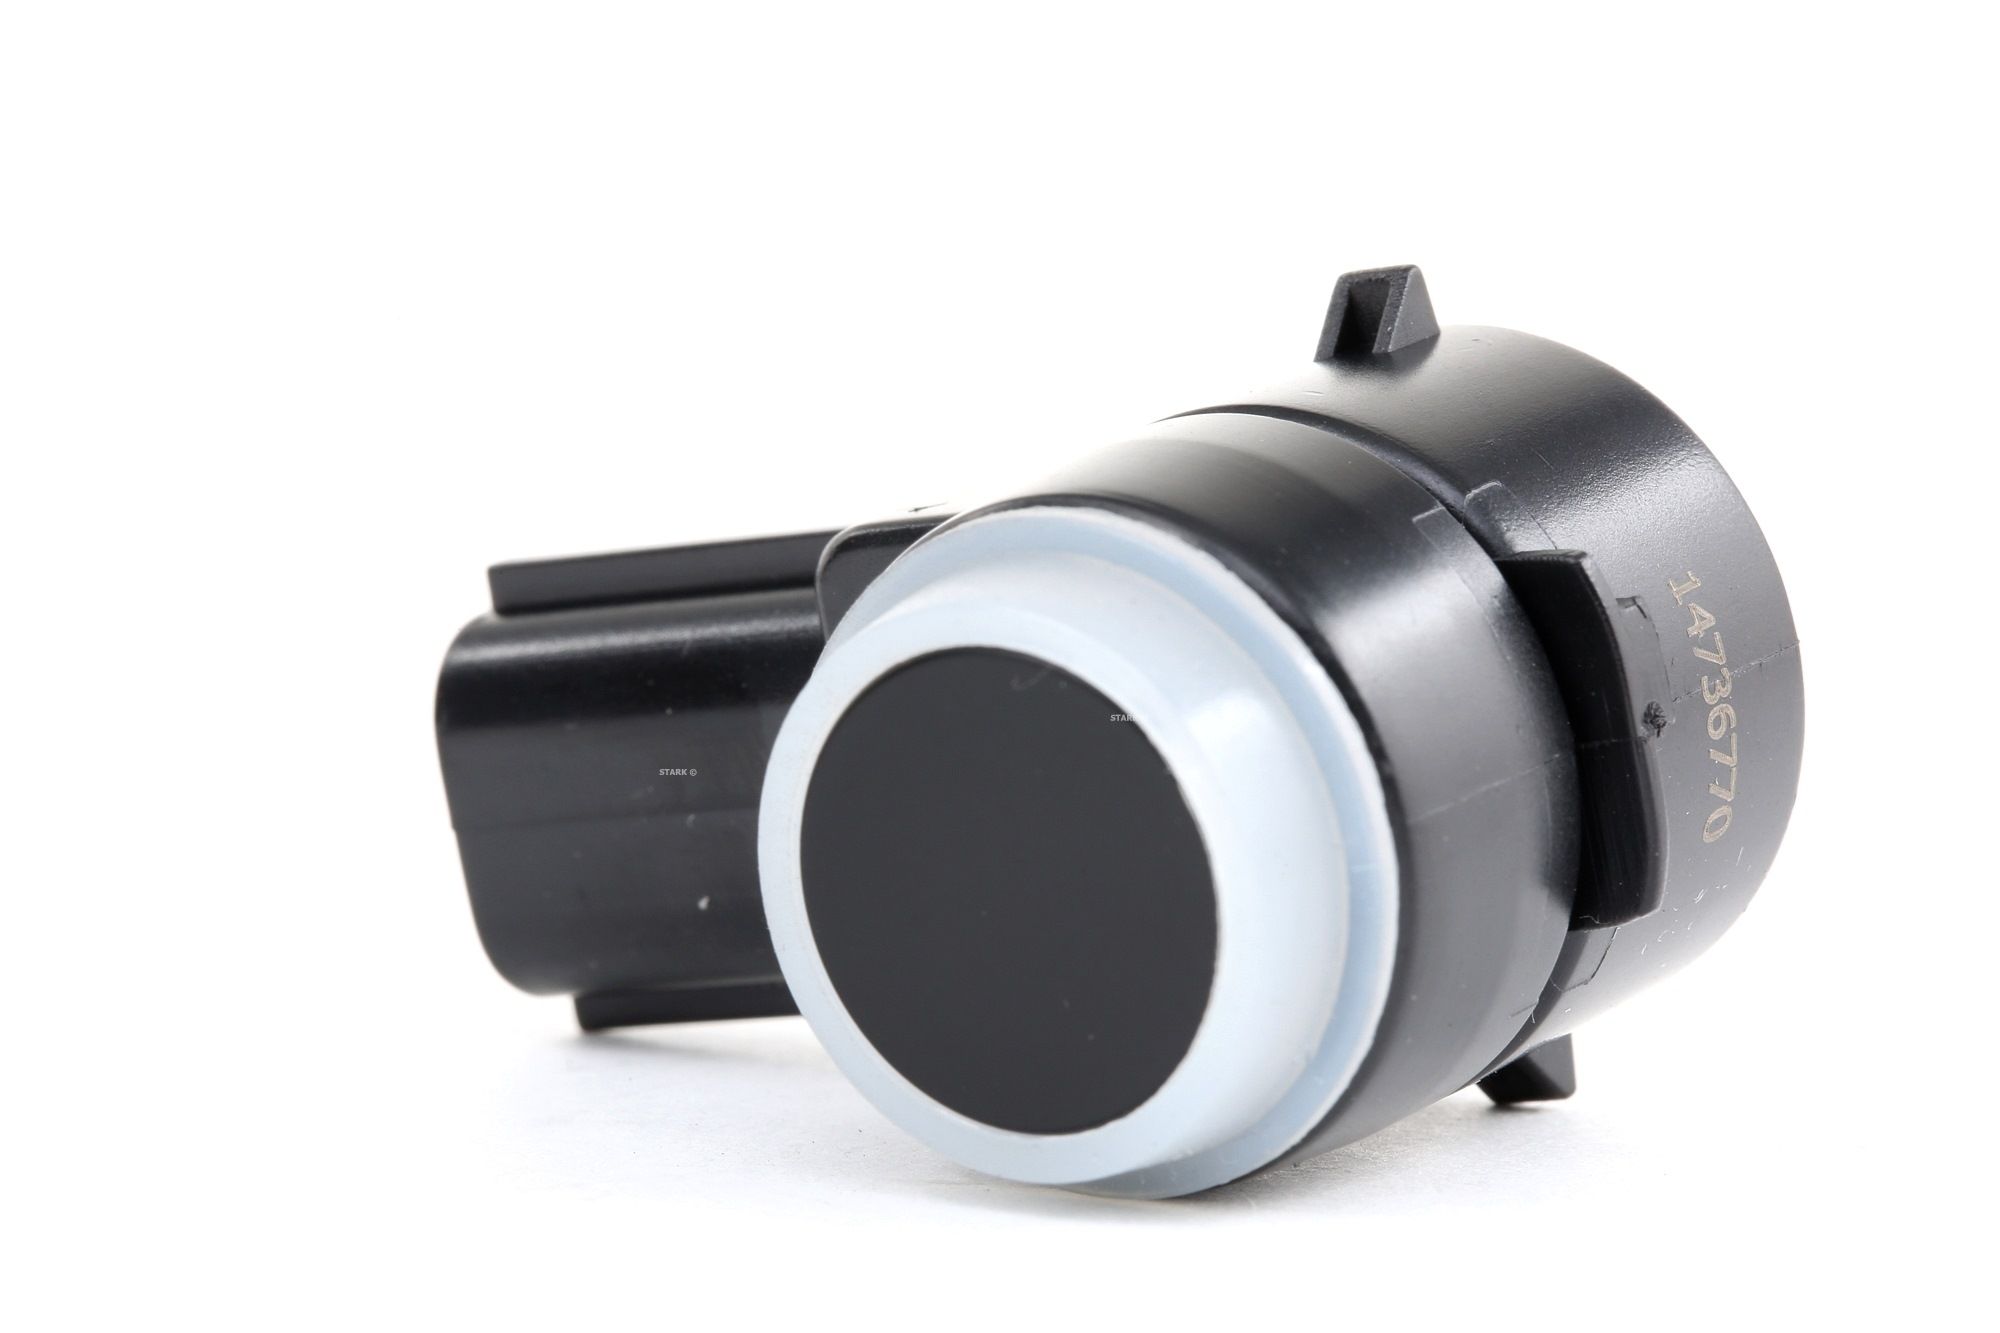 STARK SKPDS-1420069 Parking sensor Front and Rear, black, Ultrasonic Sensor